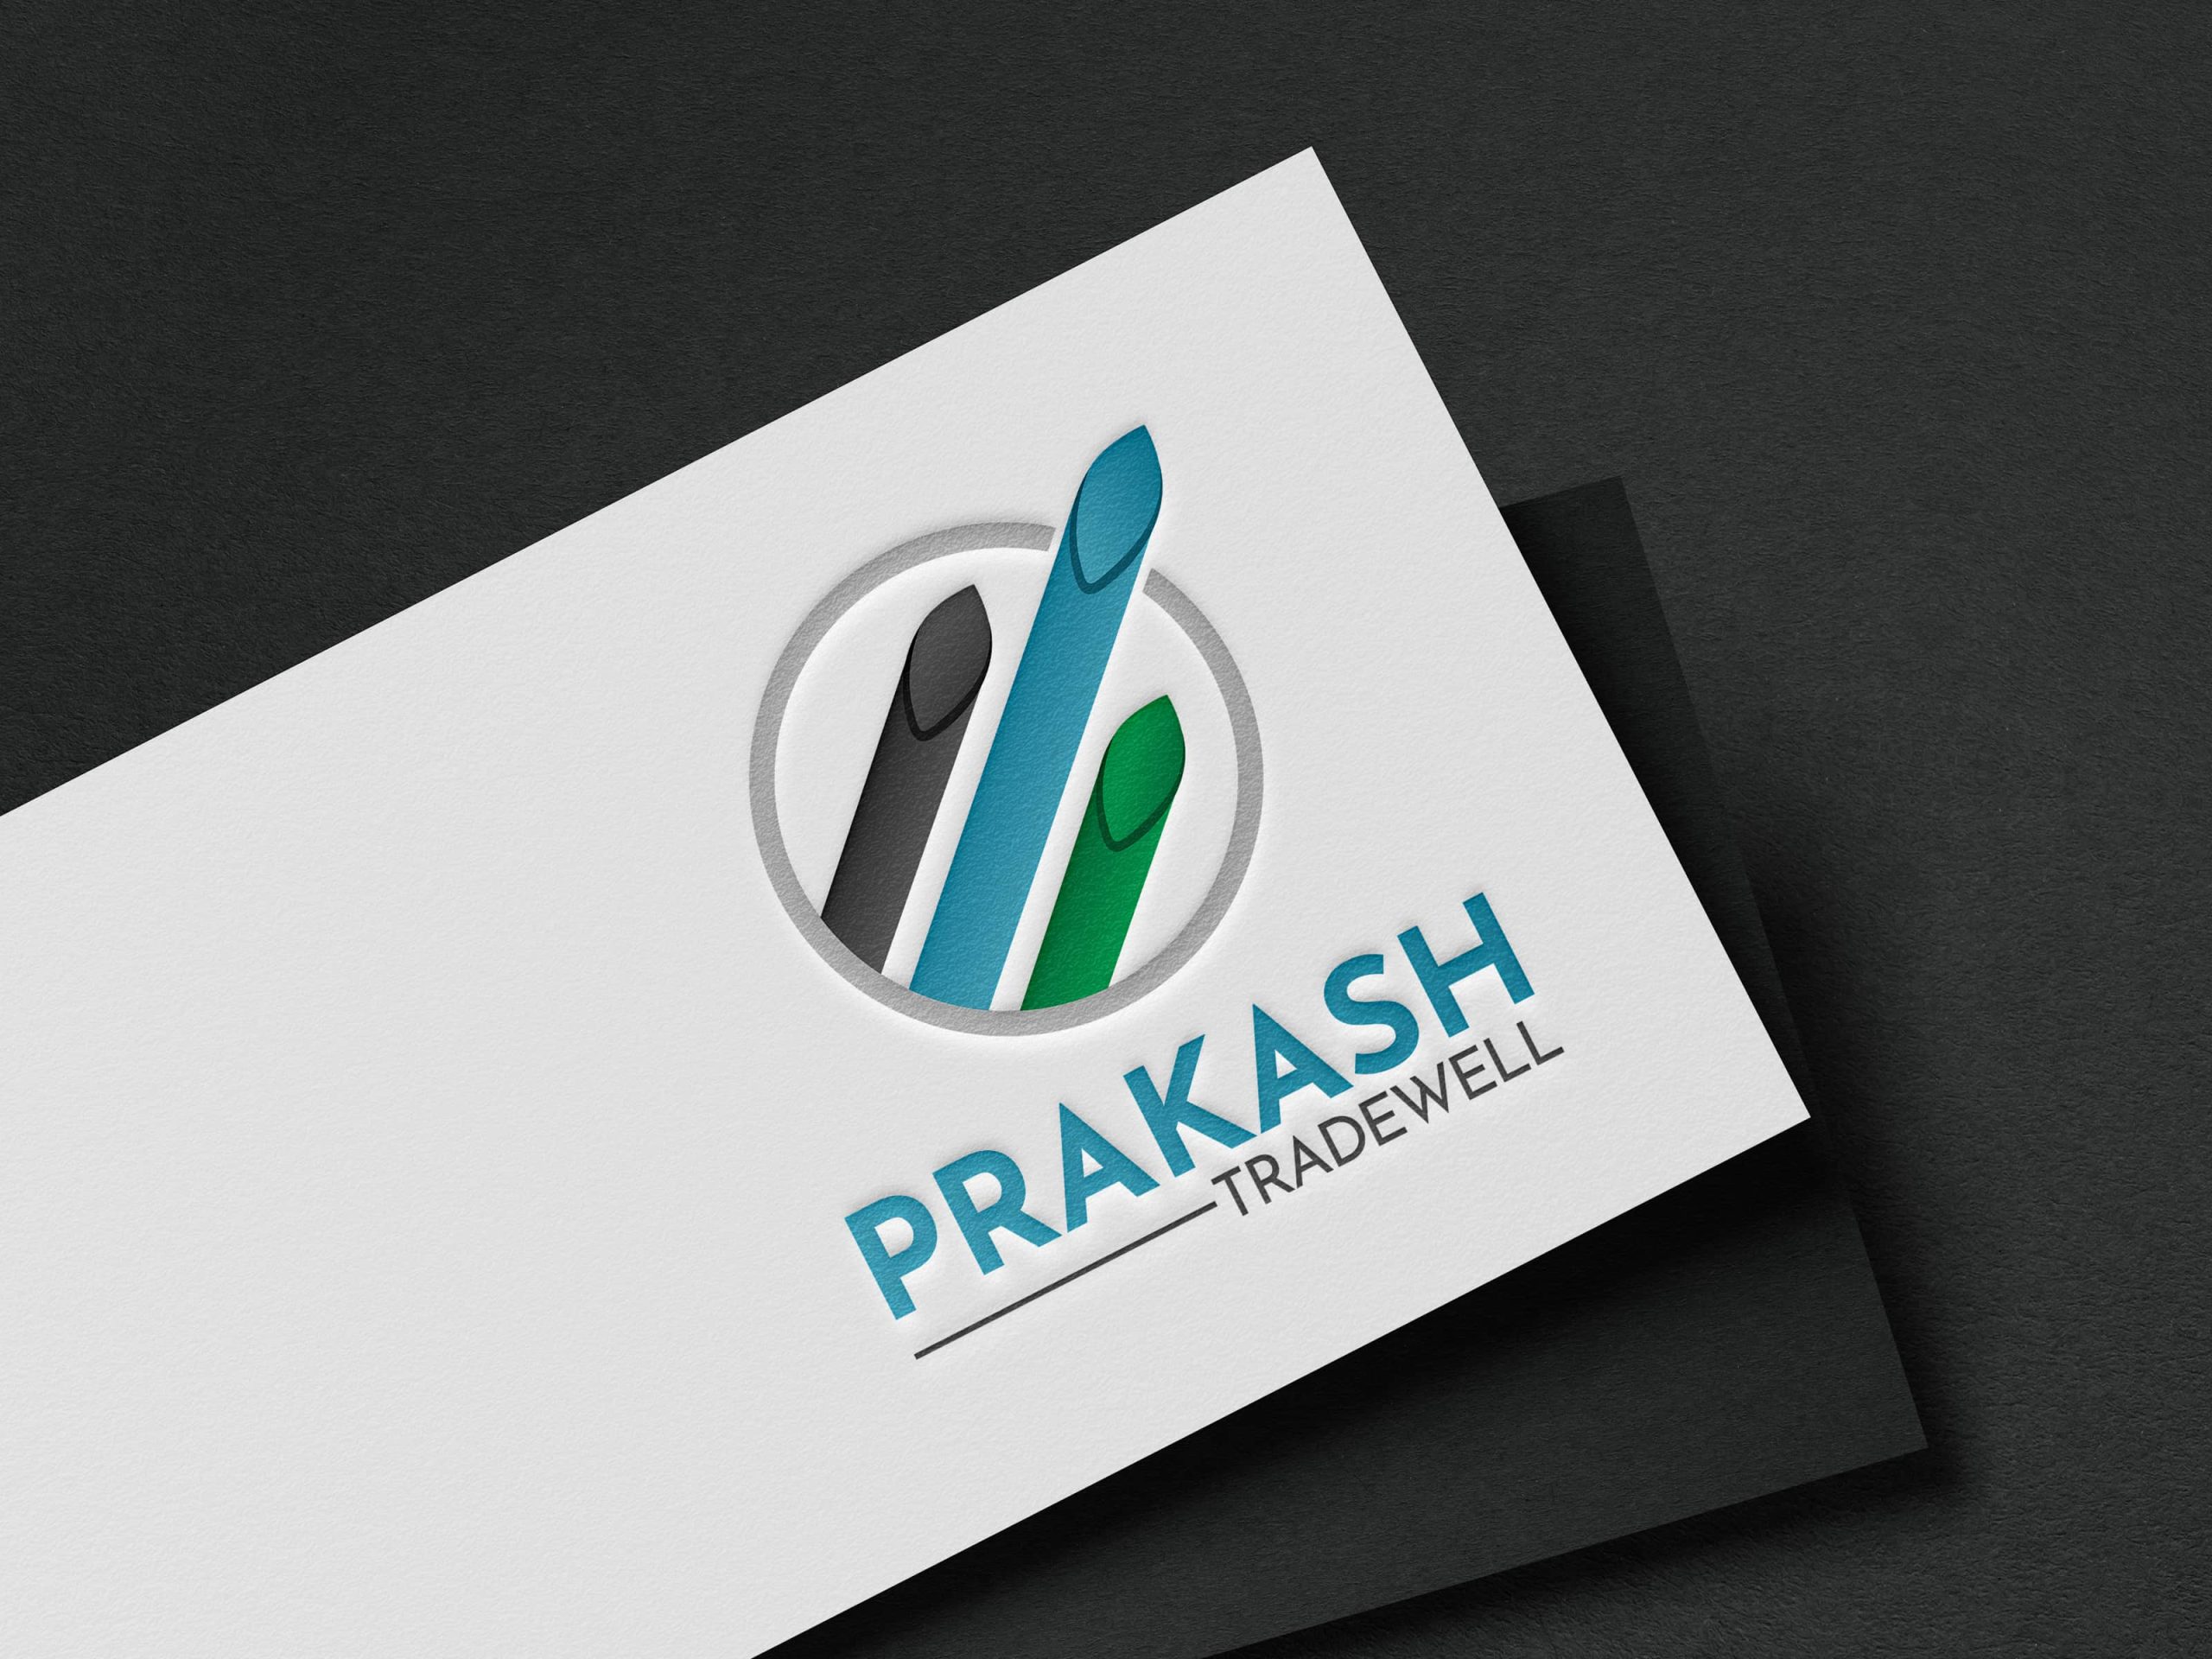 Prakash Tradewell